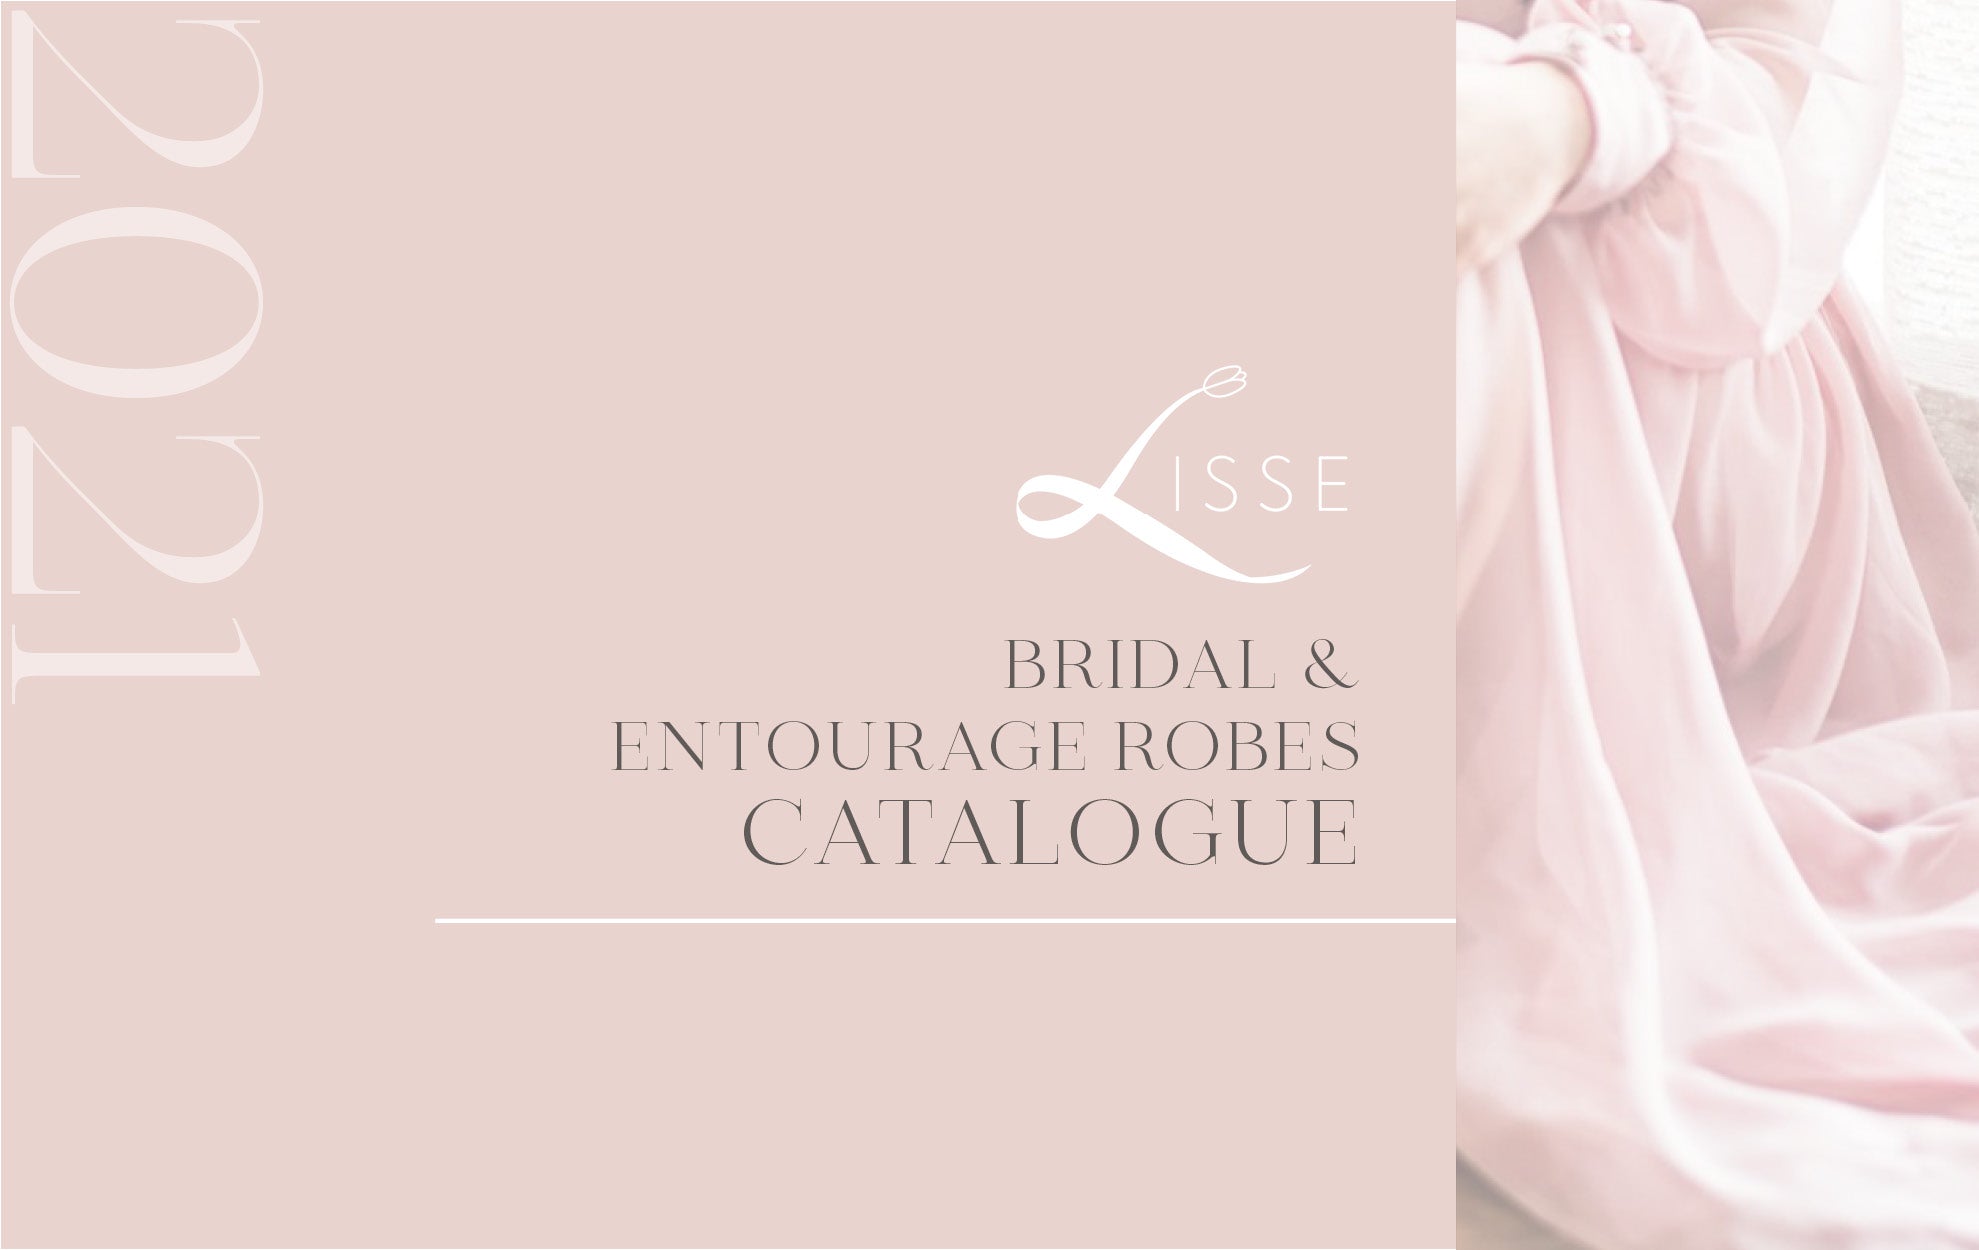 Bridal and Entourage Robes Catalogue